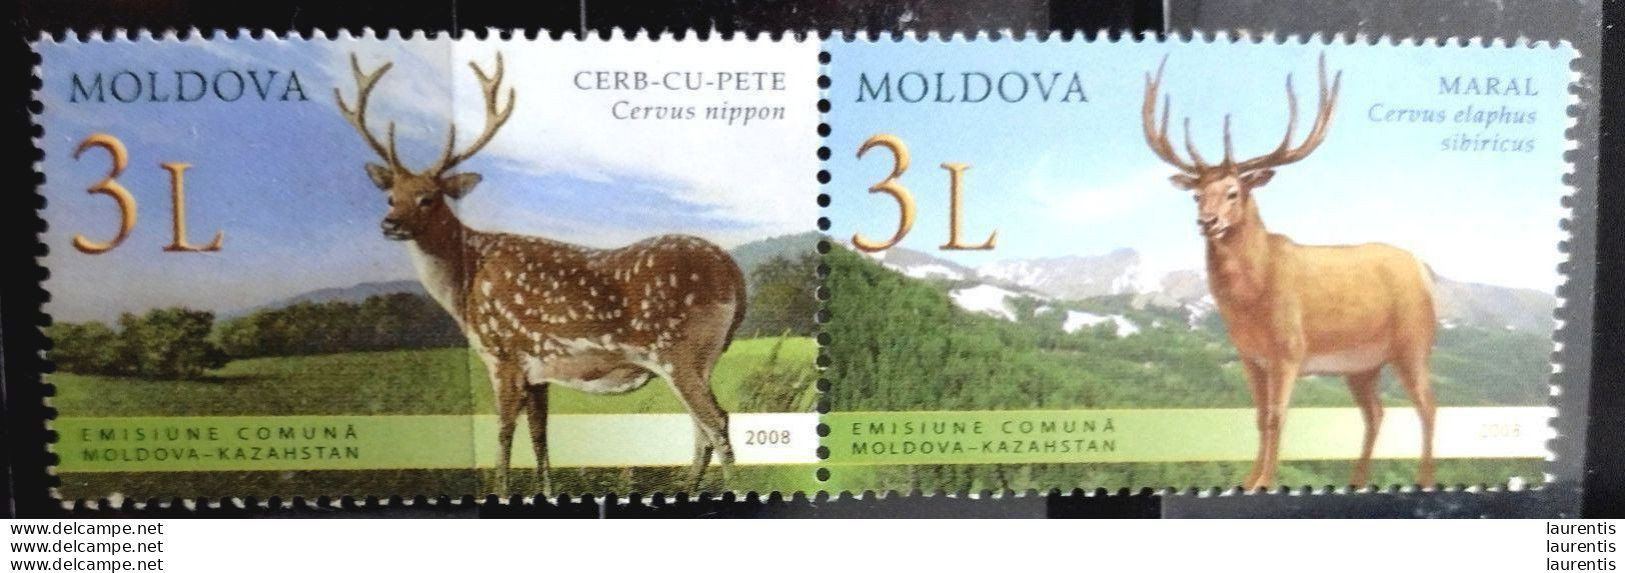 D2860   Hunting - Deers - Moldova 2008 MNH - 1,35 - Wild